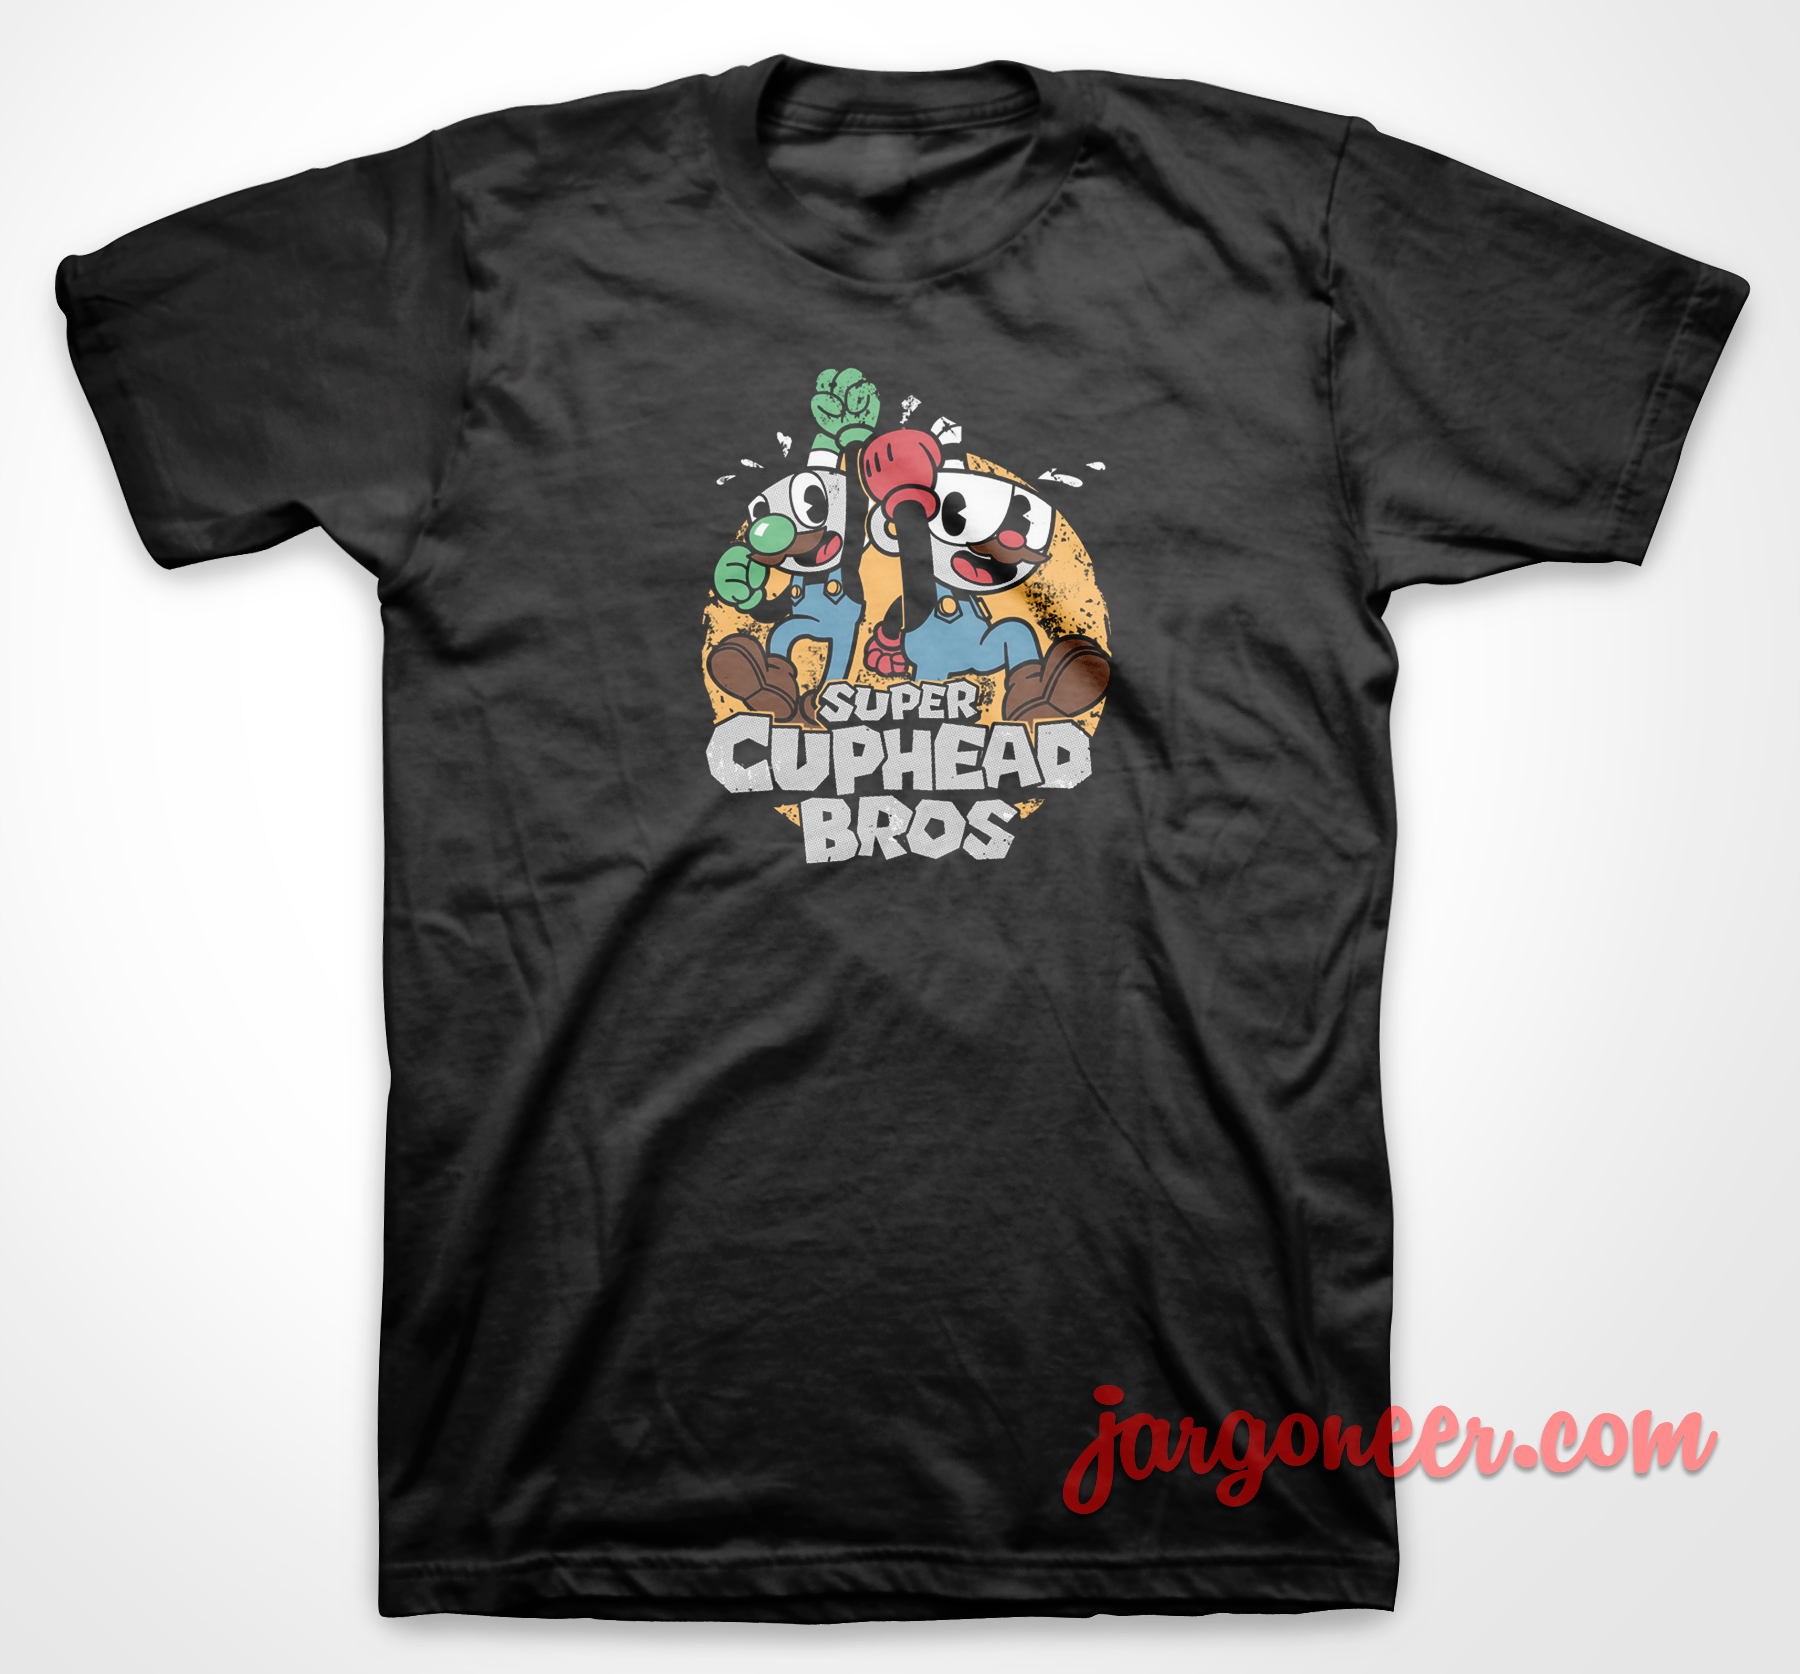 Super Cuphead Bros - Shop Unique Graphic Cool Shirt Designs